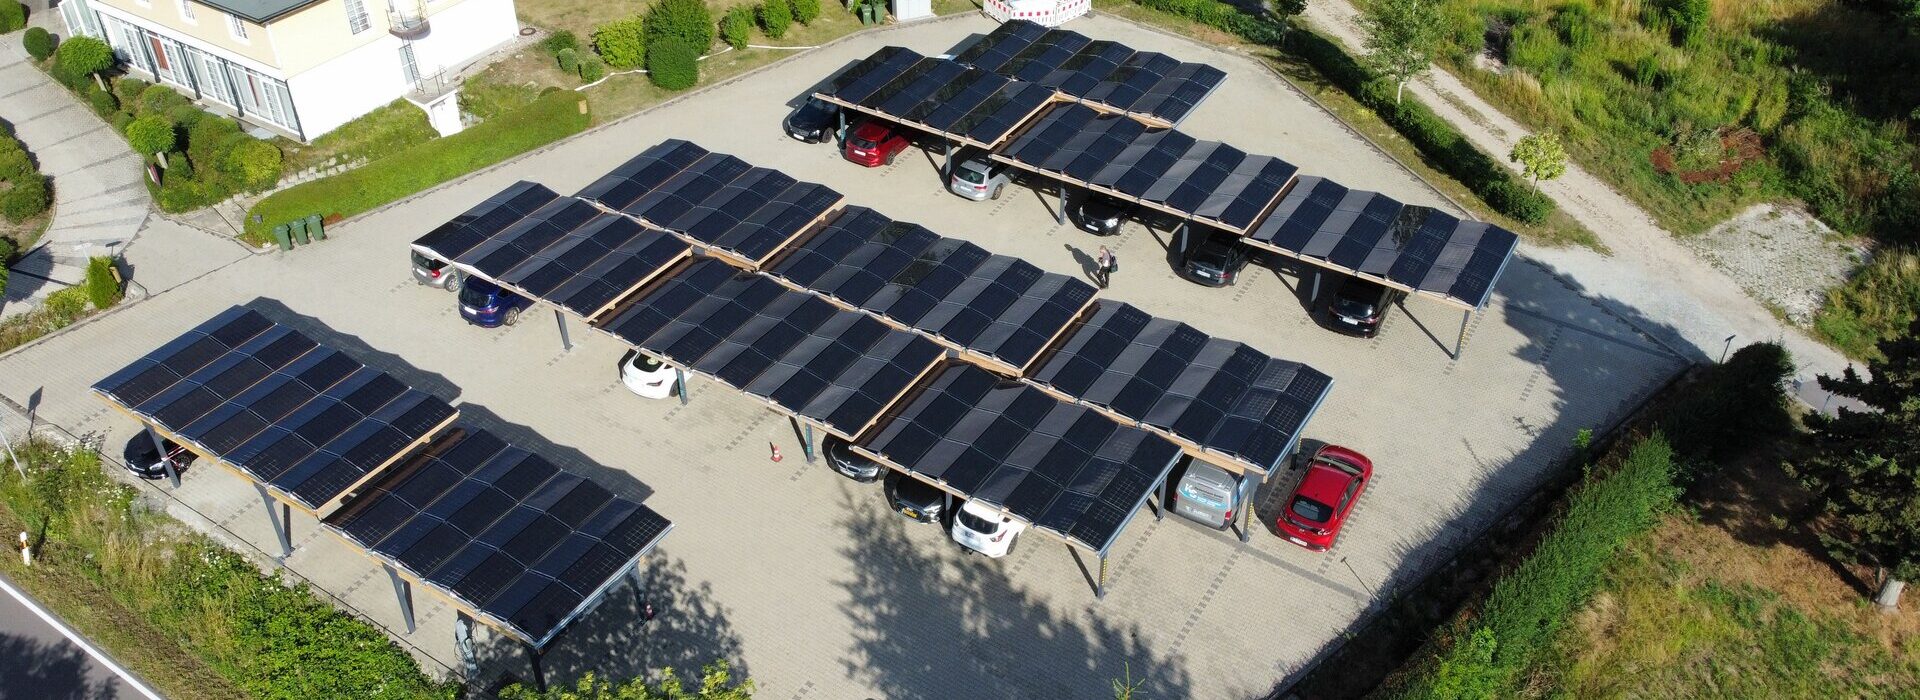 Parkplatz mit Solar Carport